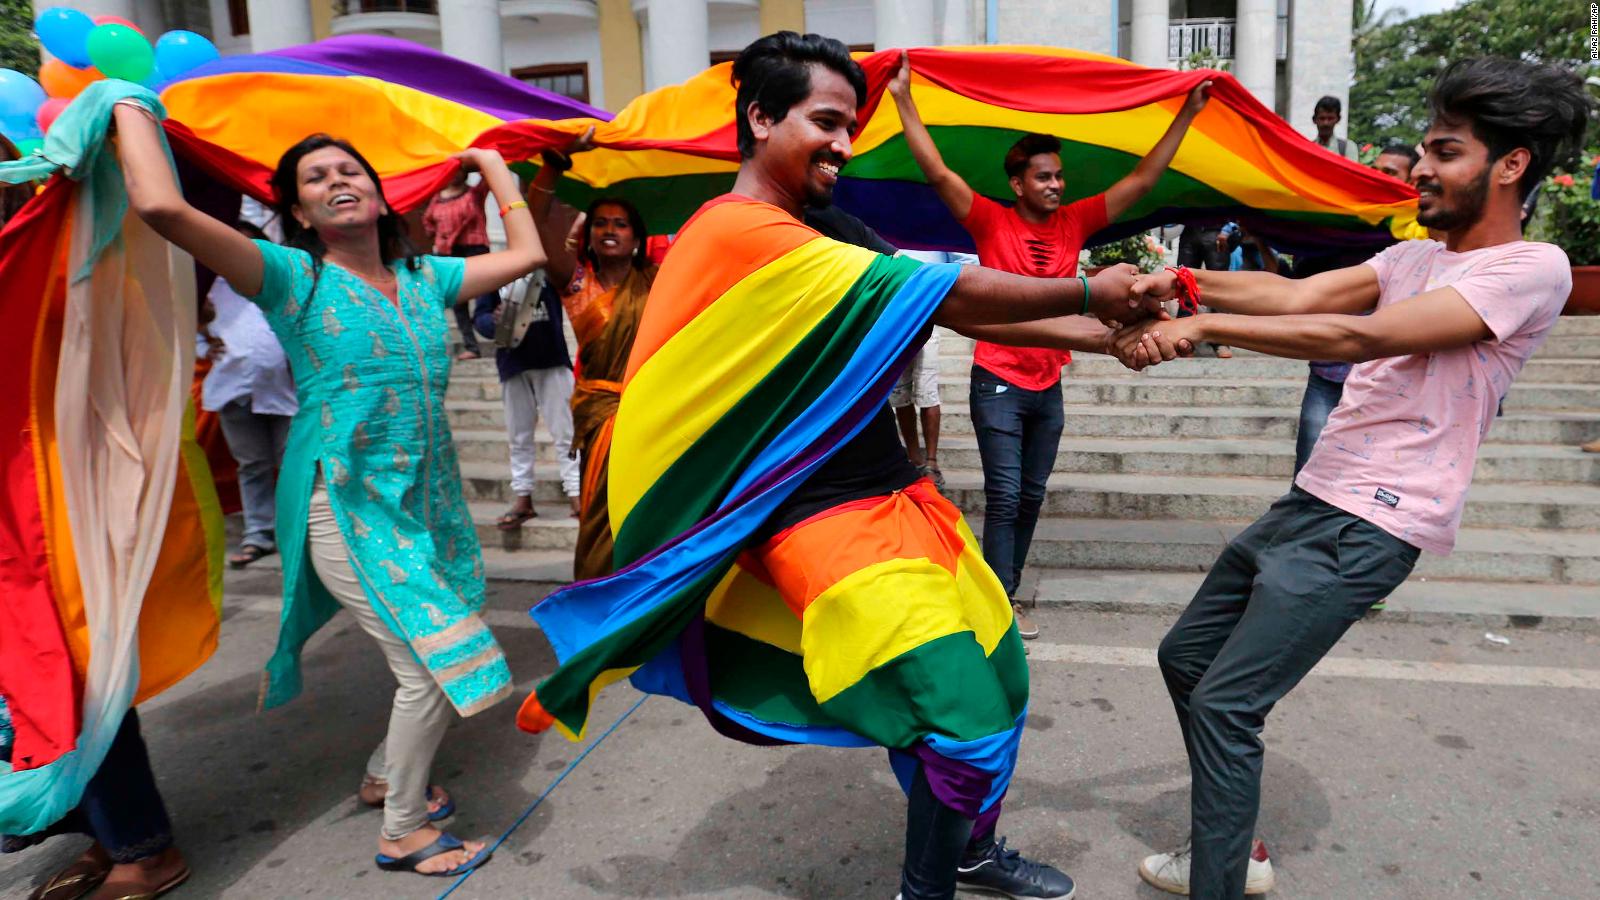 Tras A Os De Prohibici N Ya Es Legal Tener Relaciones Homosexuales En La India Cnn Video